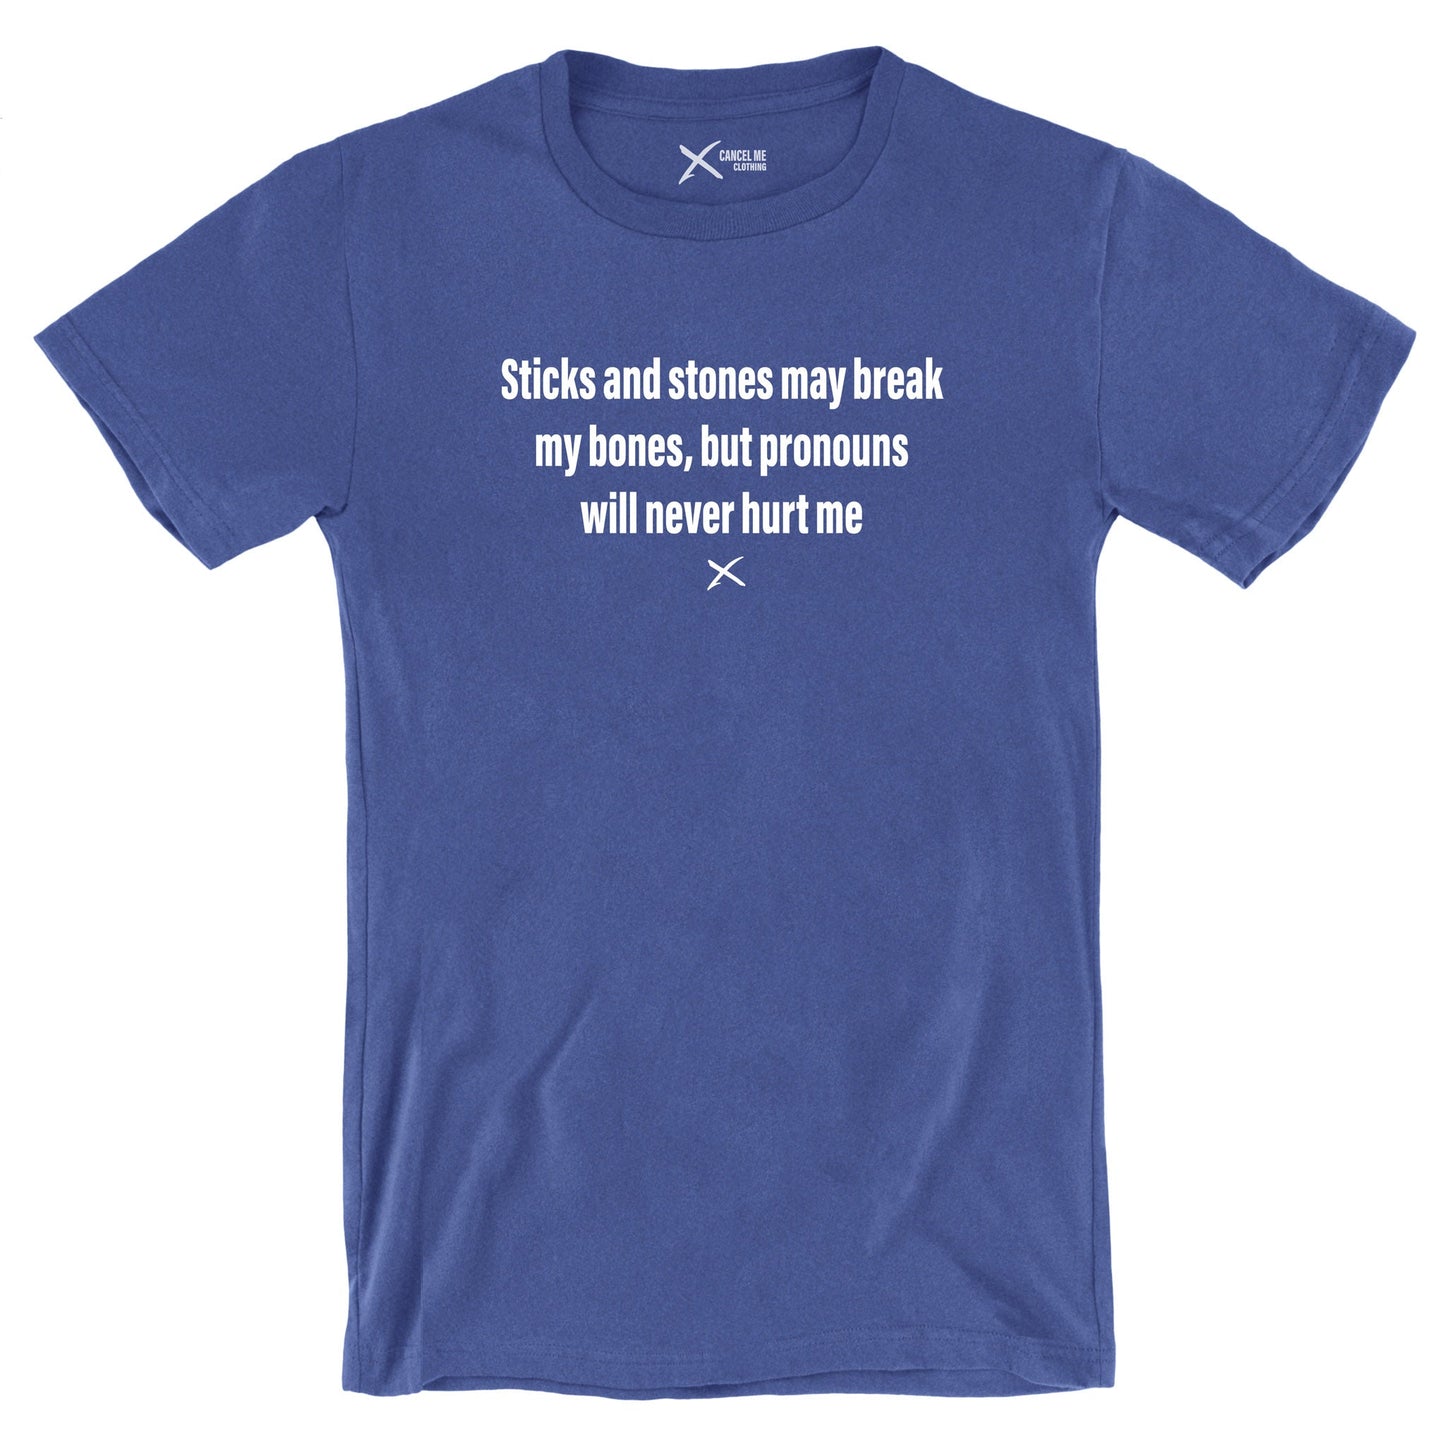 Sticks and stones may break my bones, but pronouns will never hurt me - Shirt